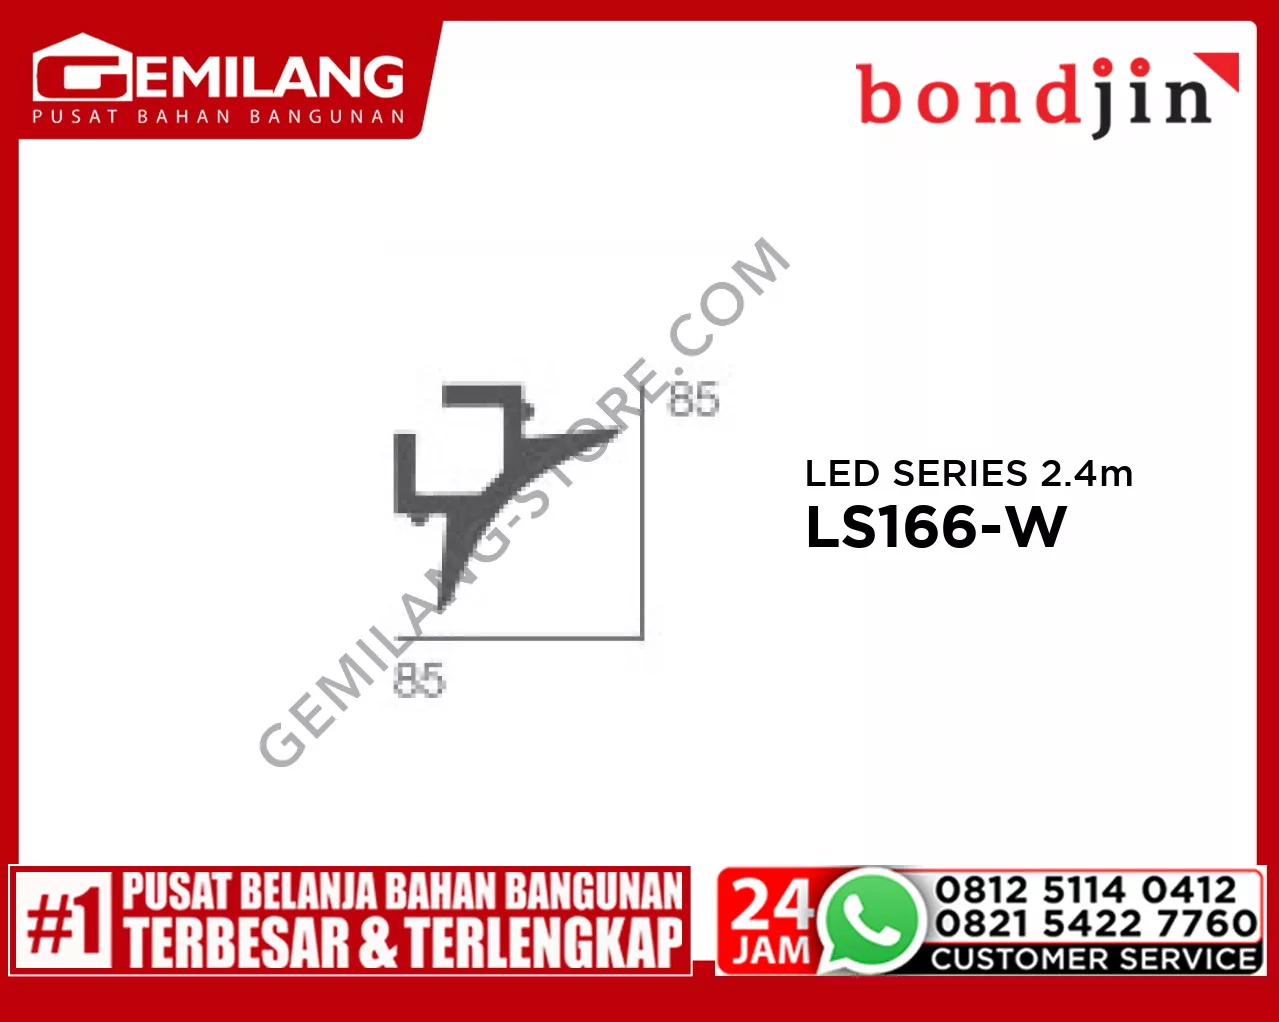 BONDJIN LED SERIES 2.4M LS166-W